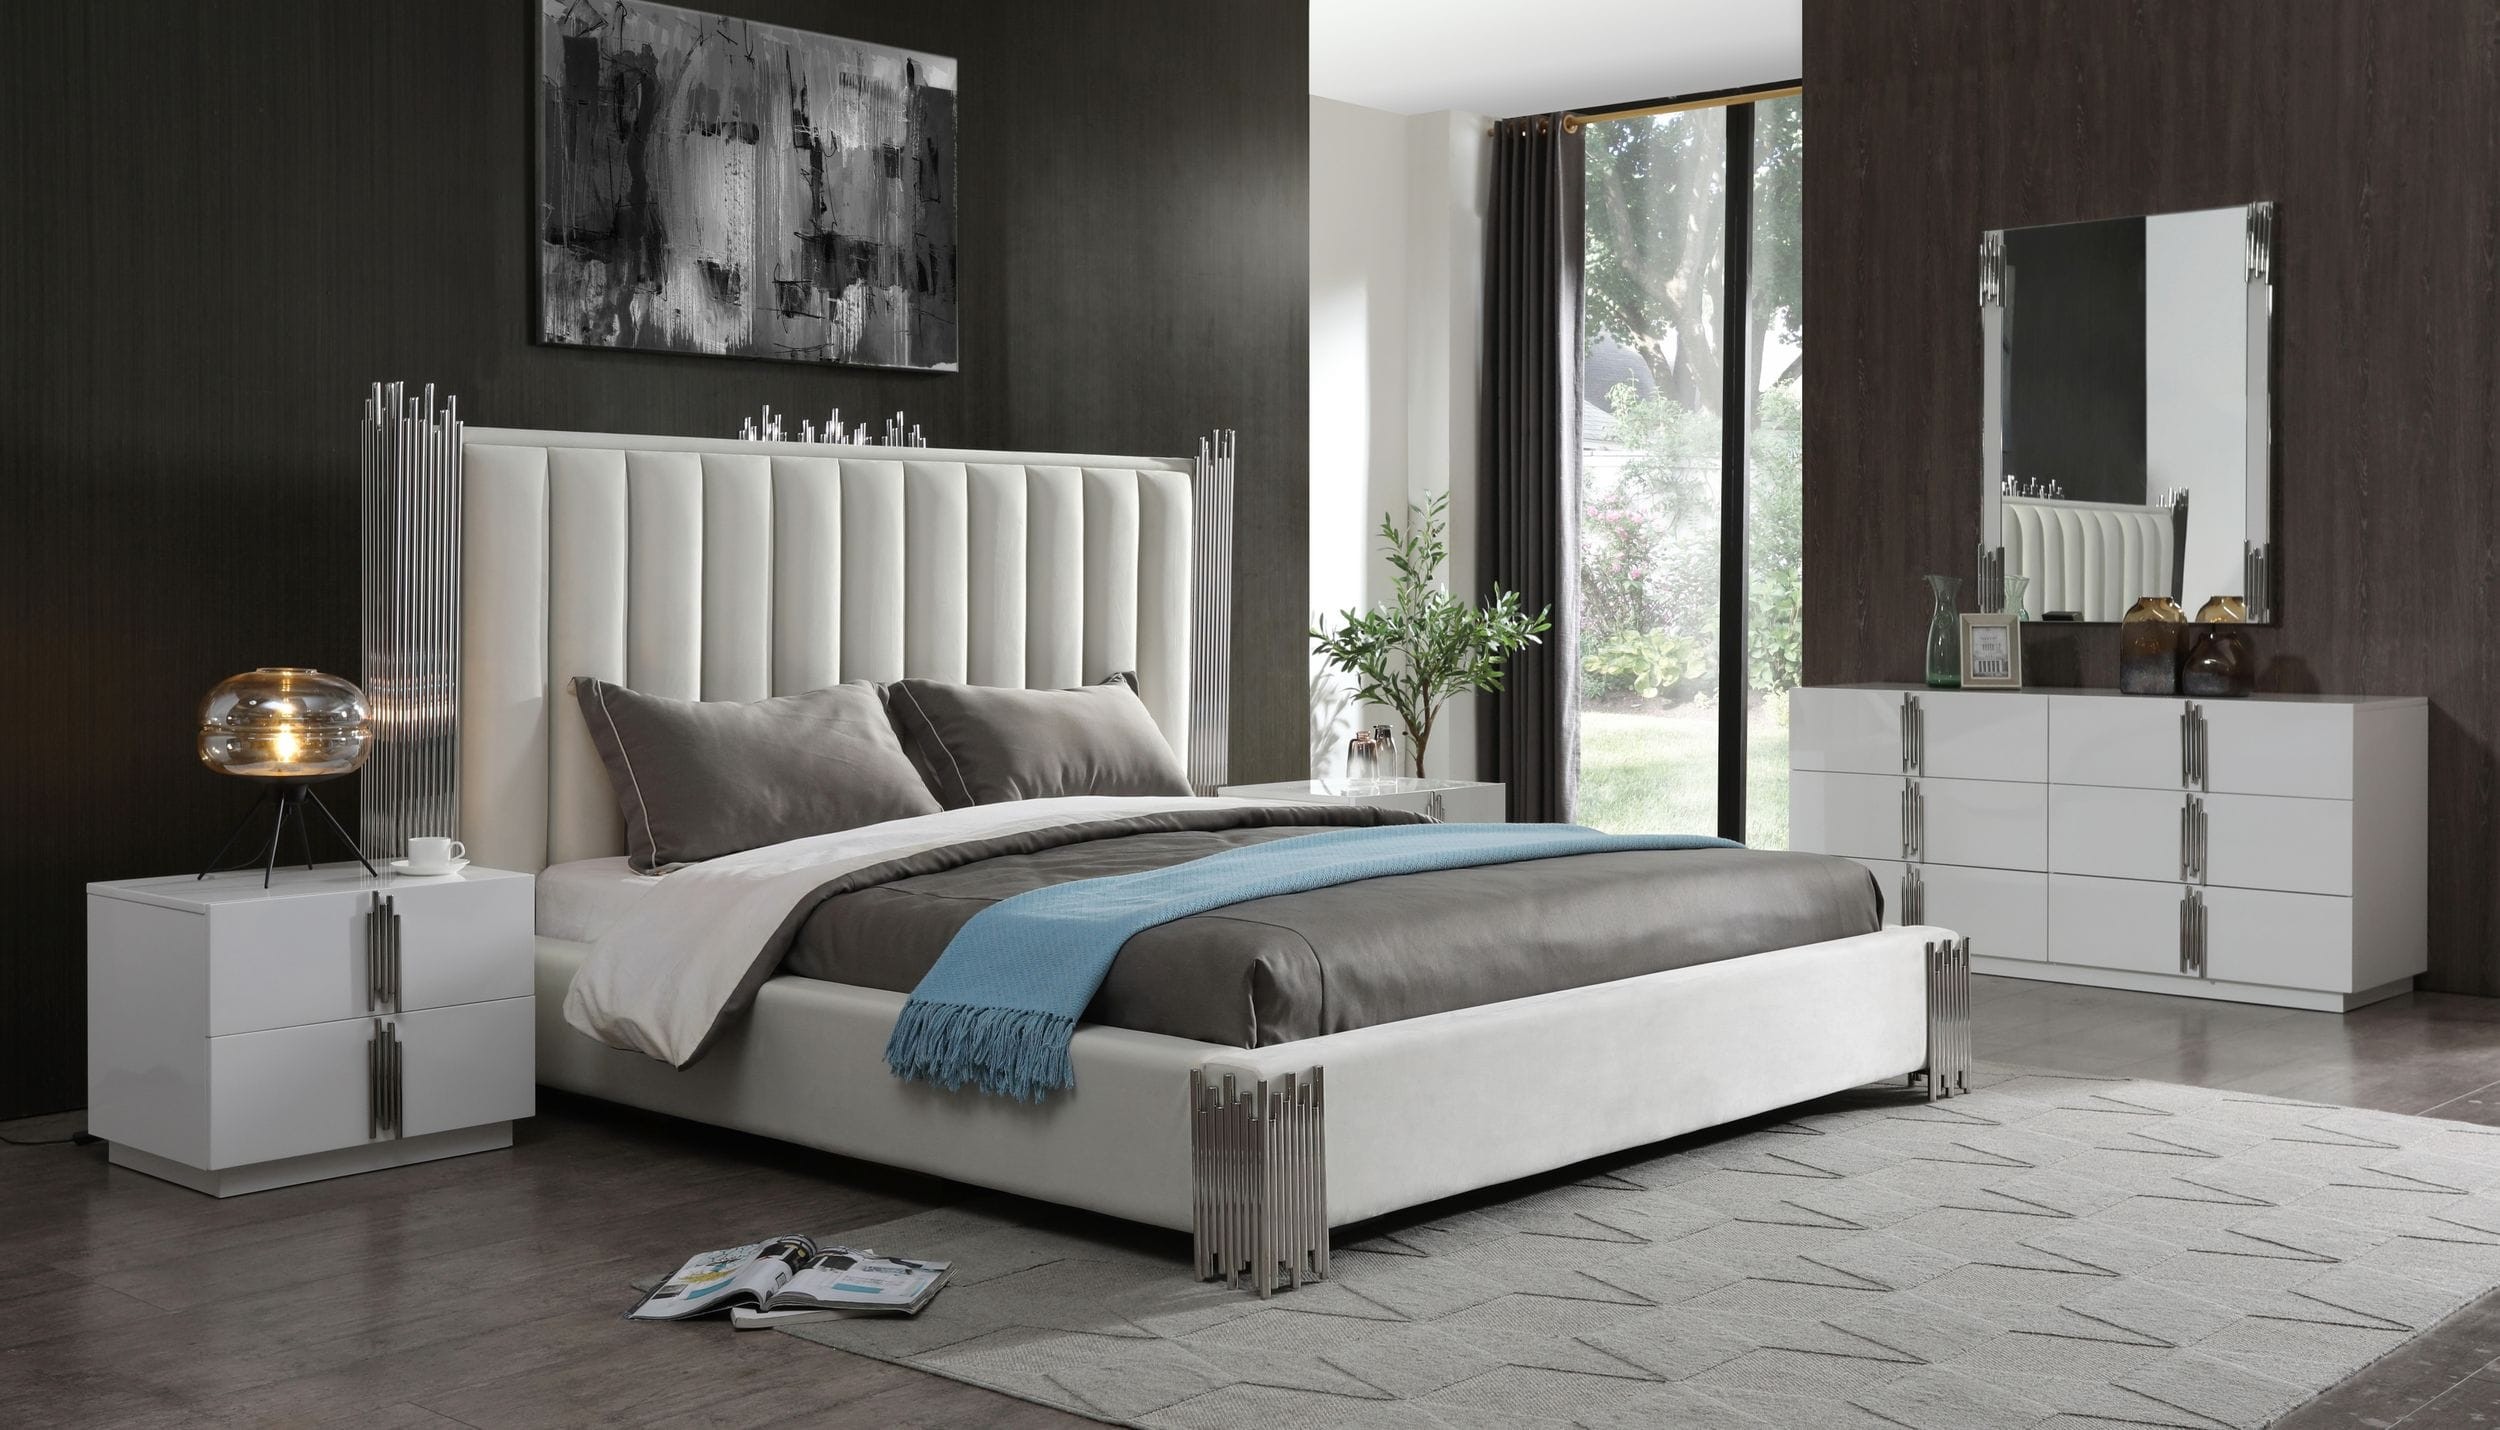 stainless steel bedroom furniture